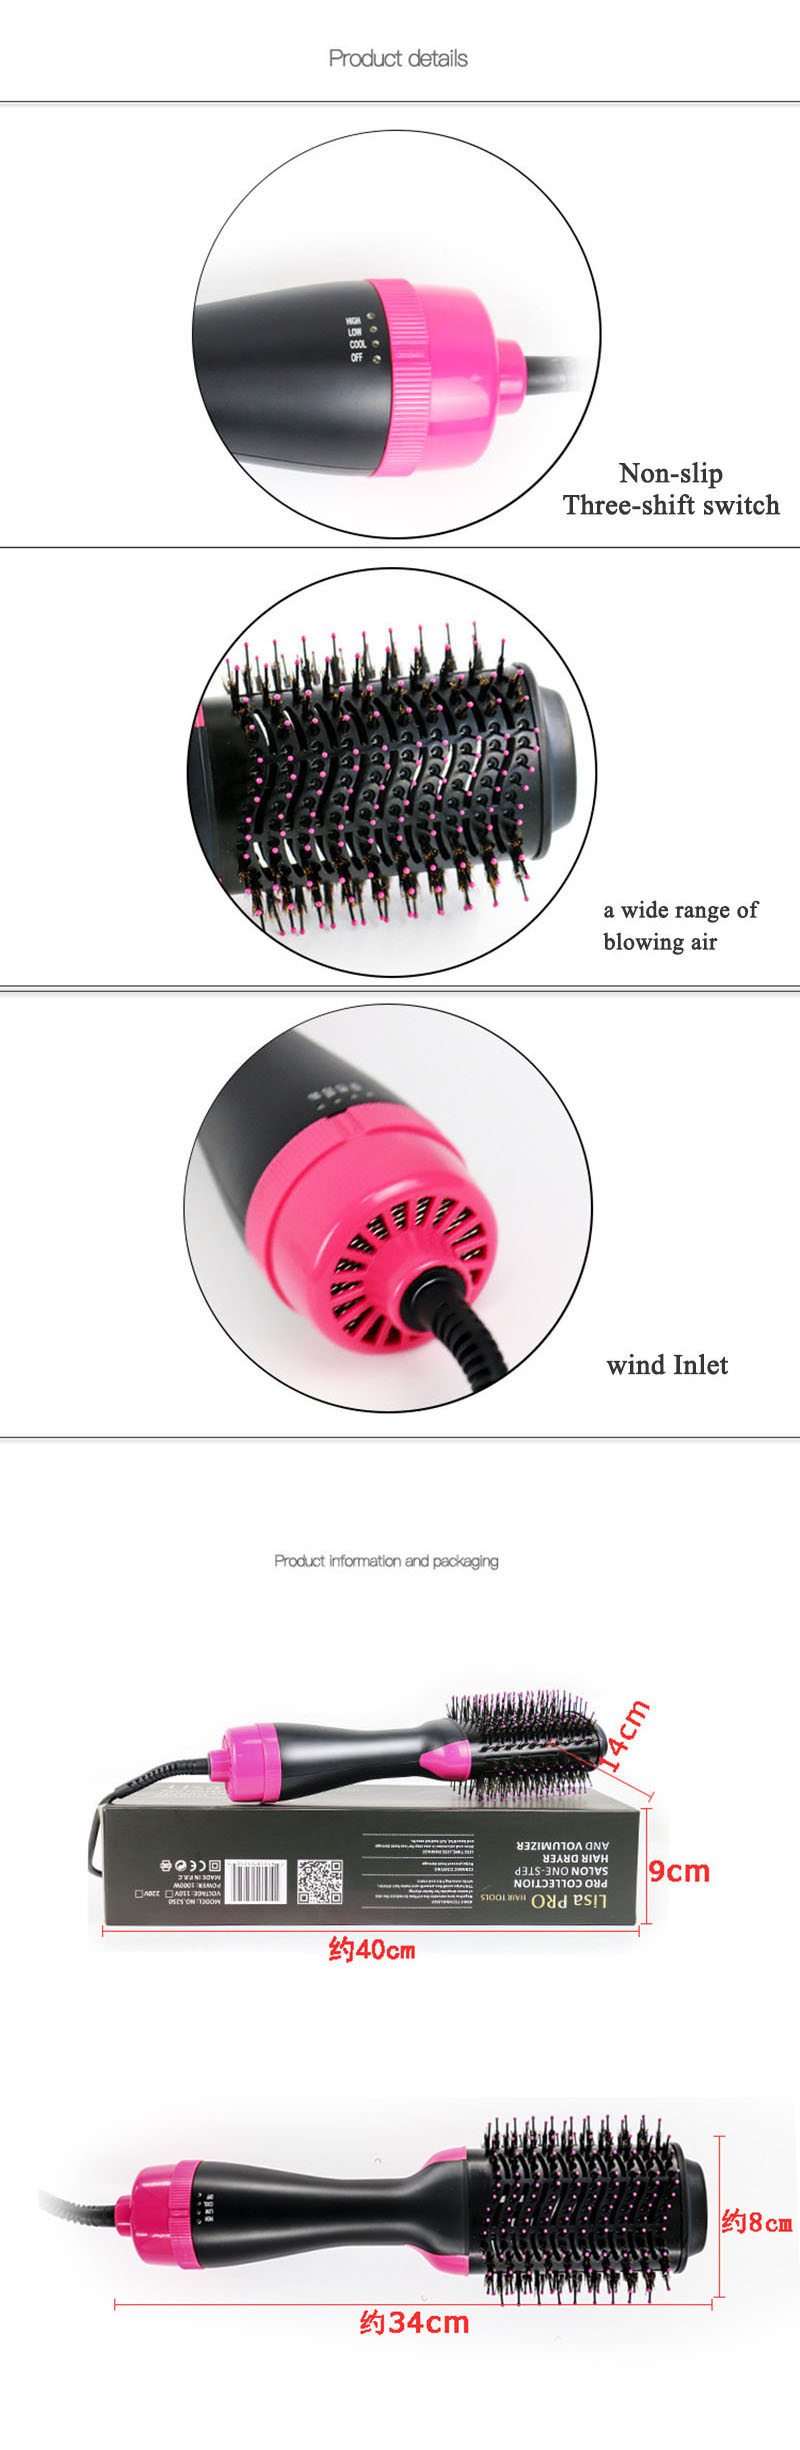 Salon One-Step Hair Dryer & Volumizer